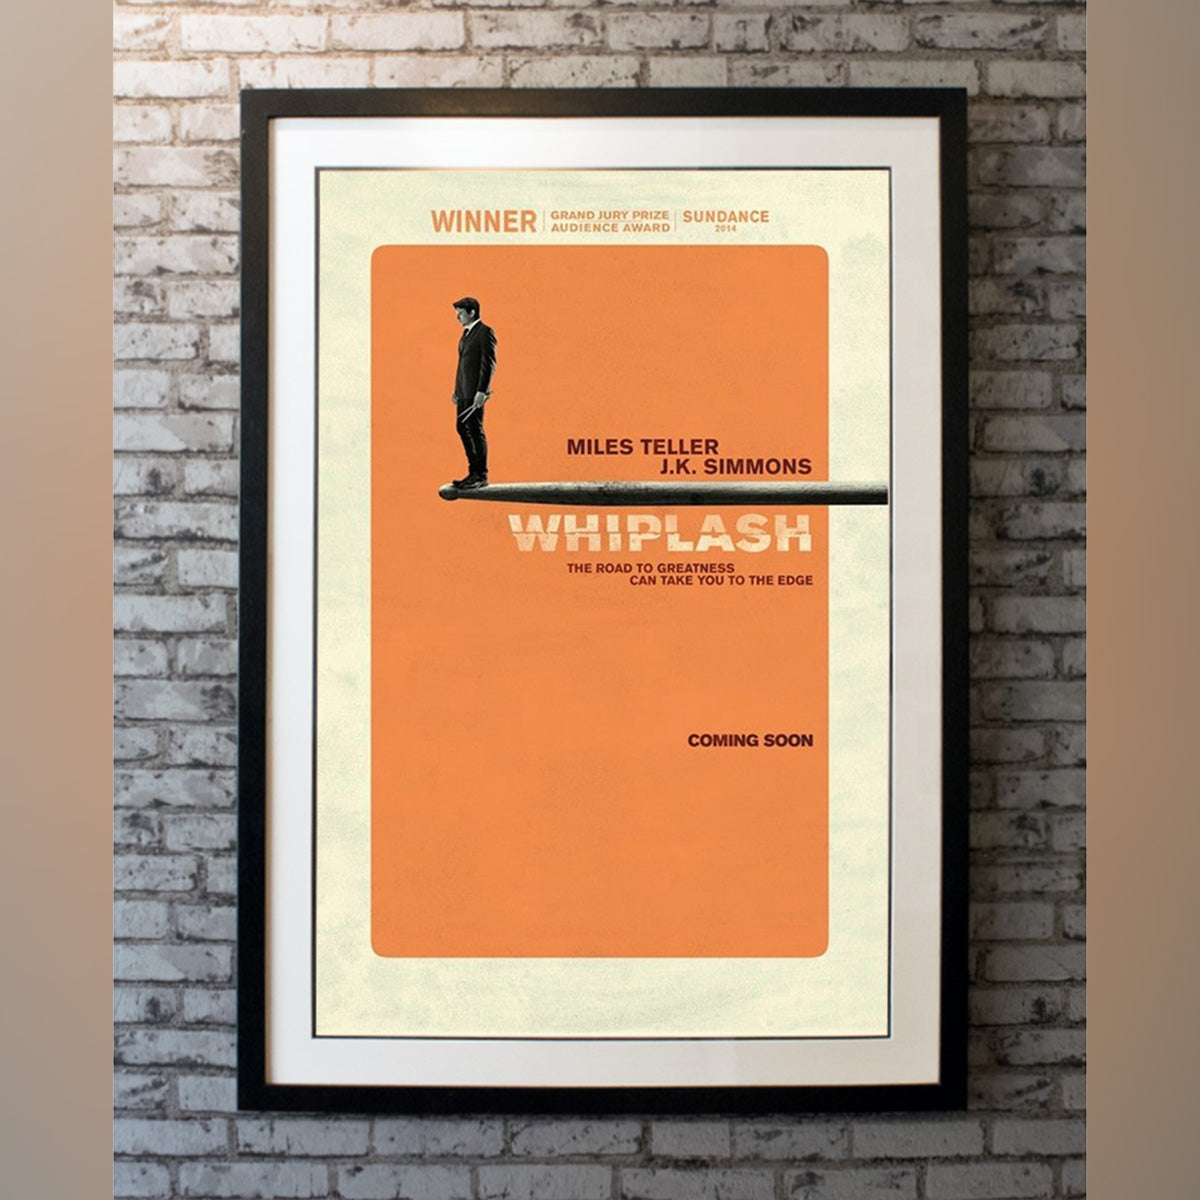 Original Movie Poster of Whiplash (2014)